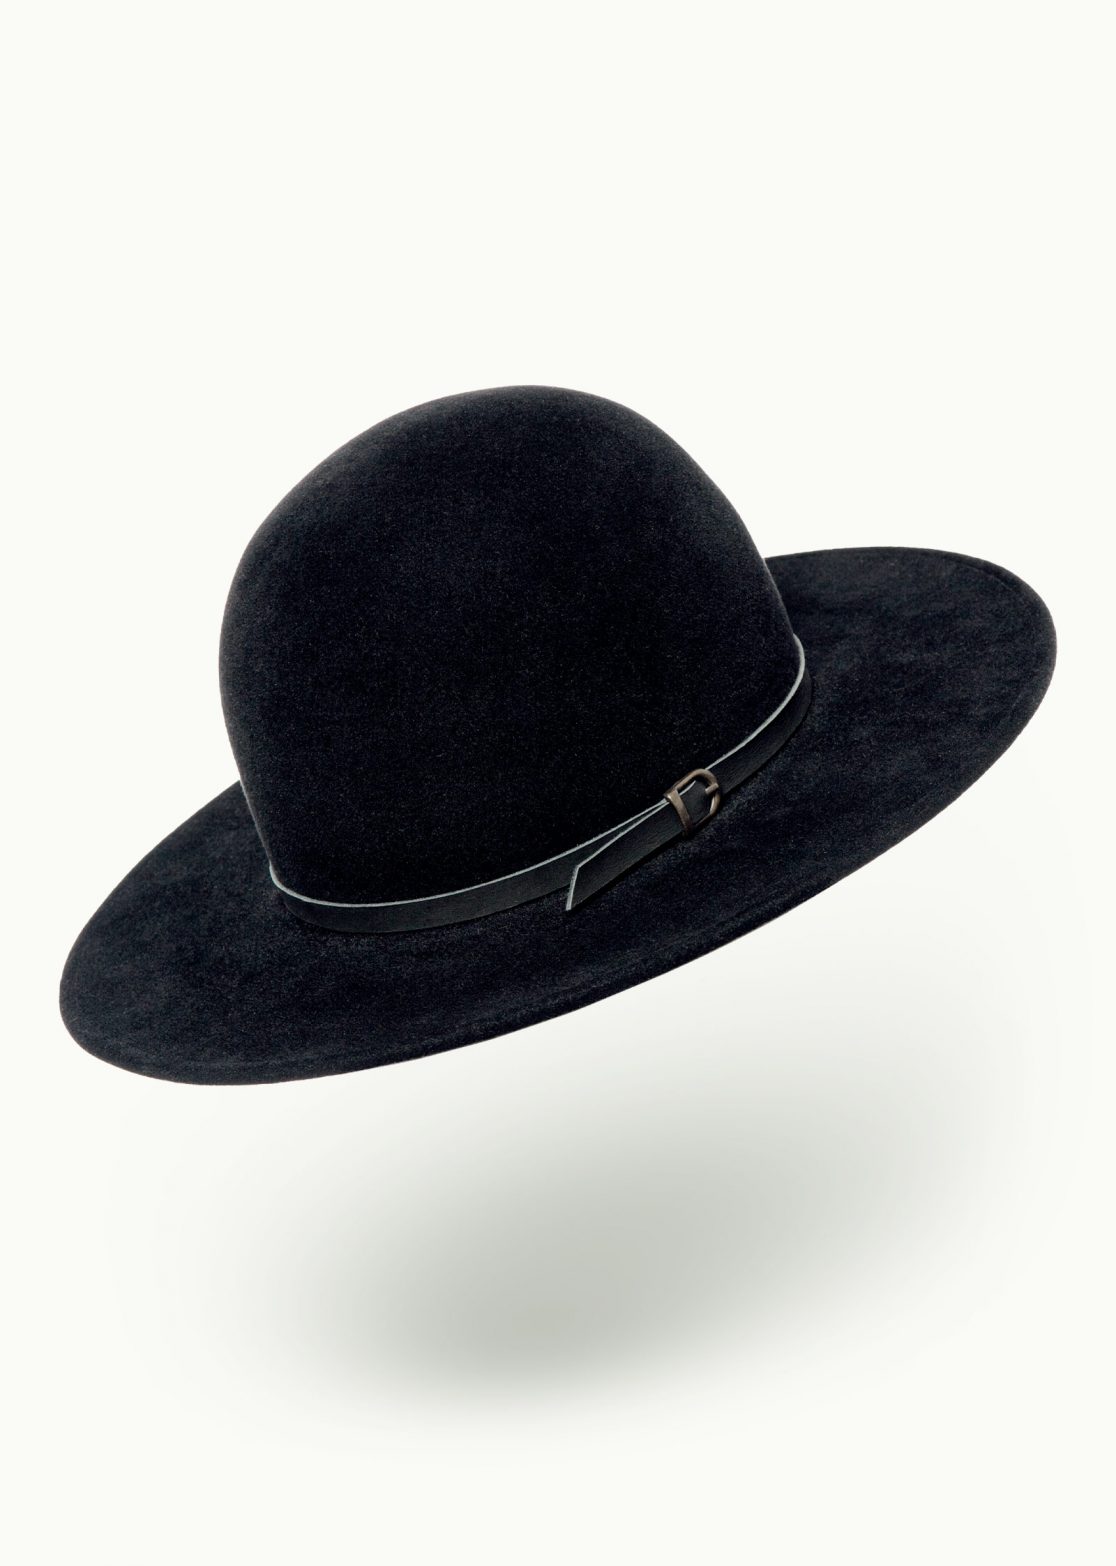 Hats - Women - Unisex - Men - Sphere Black Velour Image Primary